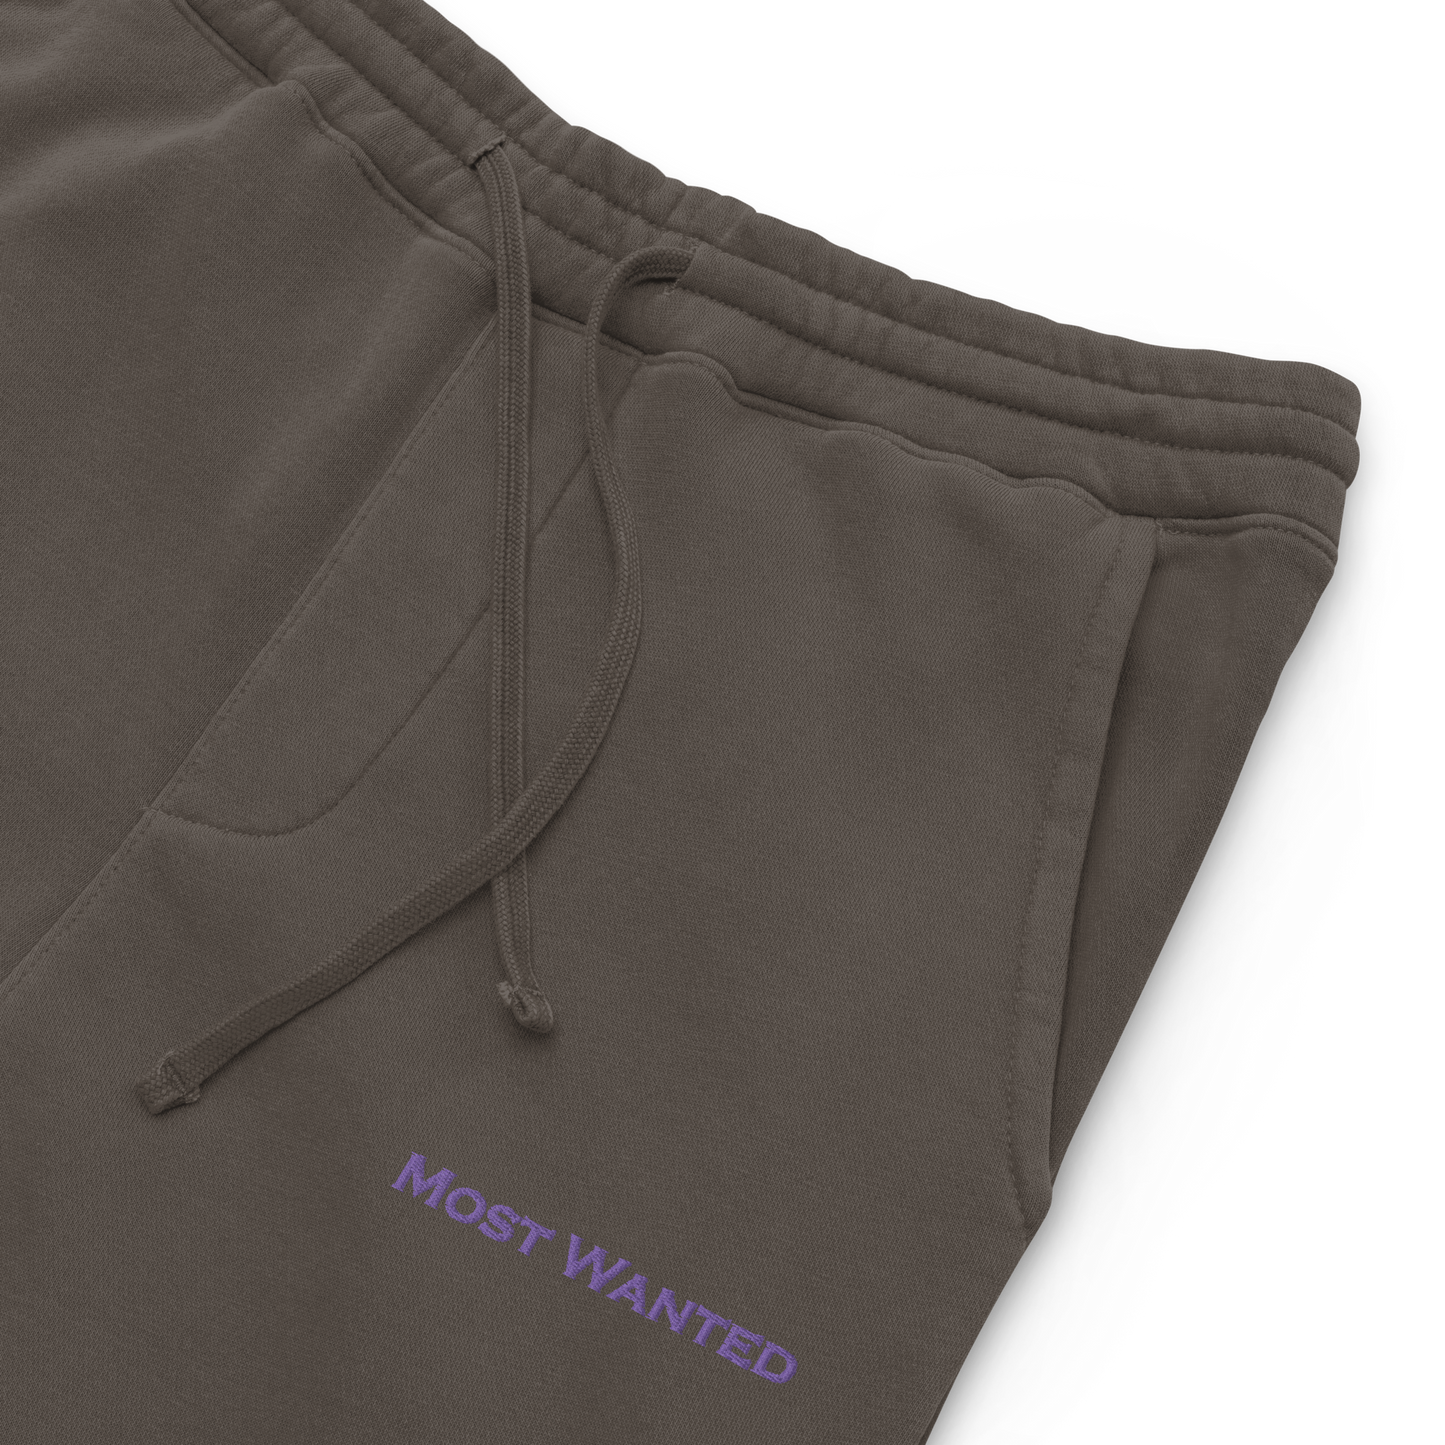 Most Wanted "Purple" Pastel🥶🥶🥶 Sweatpants